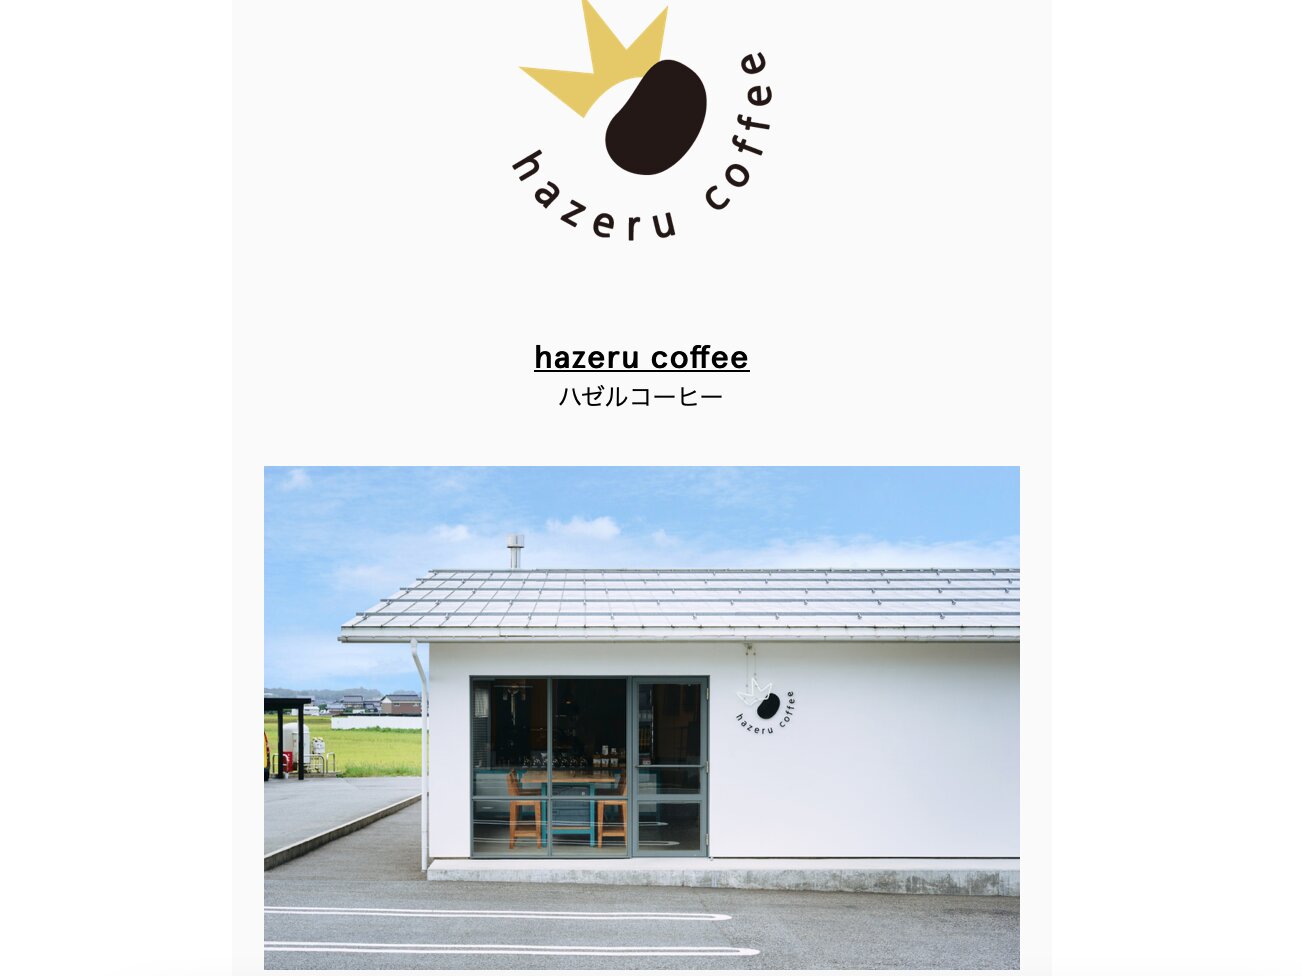 hazeru coffeeの店舗（PostCoffee公式サイトから引用）